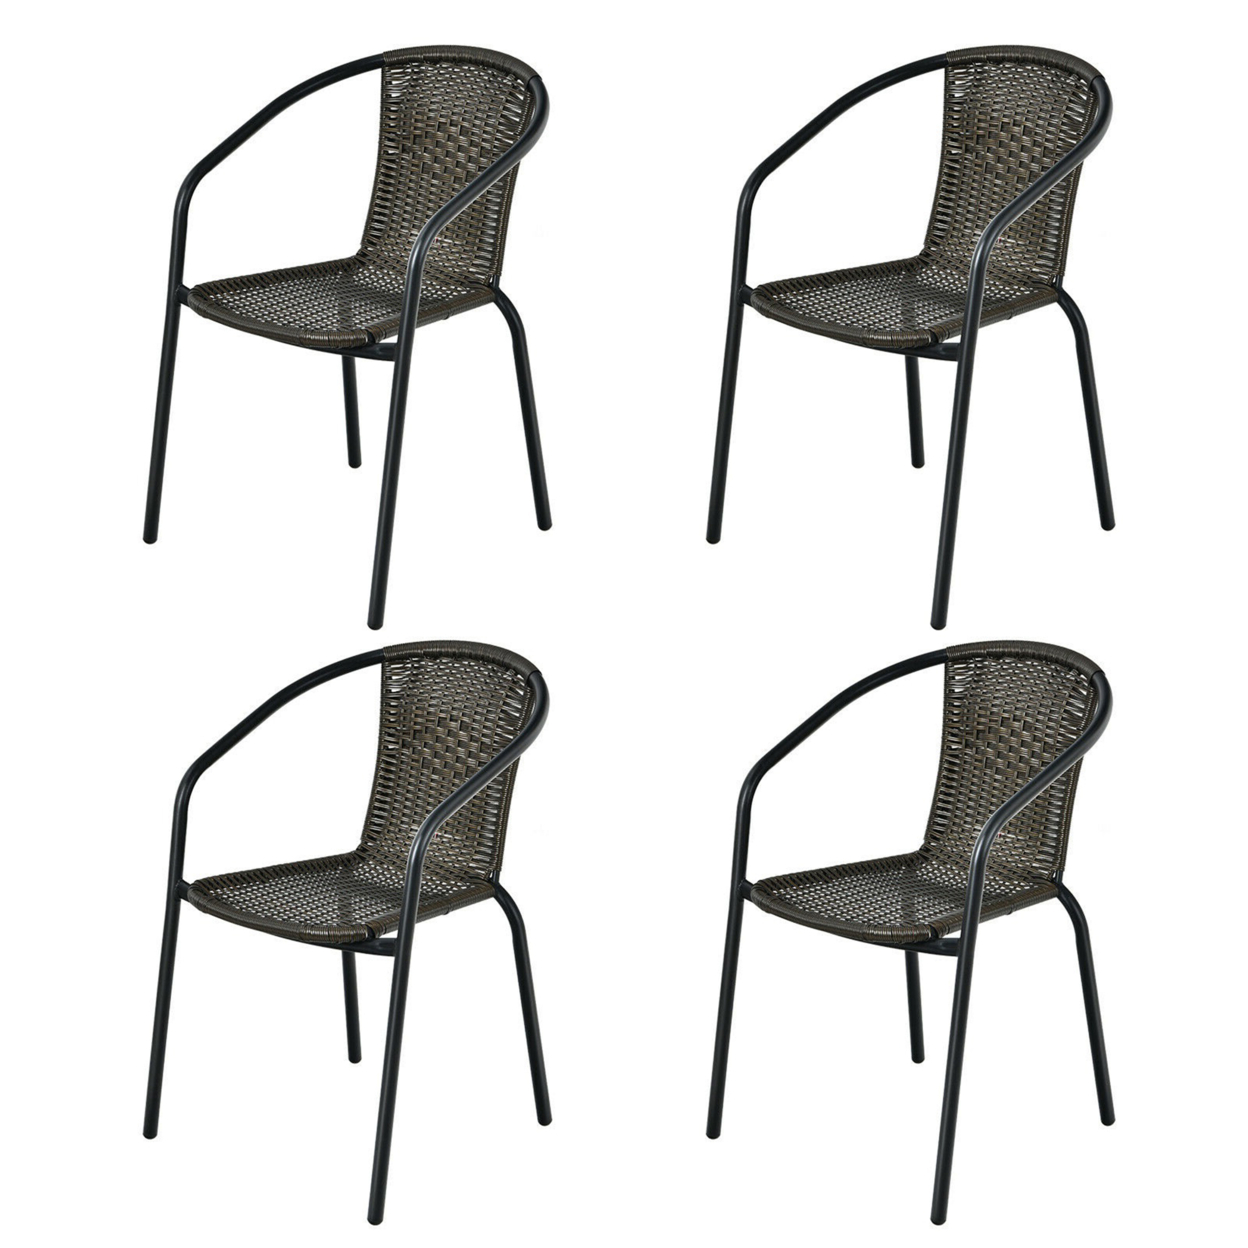 Gymax Patio Rattan Dining Chair Outdoor Stackable Armchair Yard Garden - Black, 10 Pcs